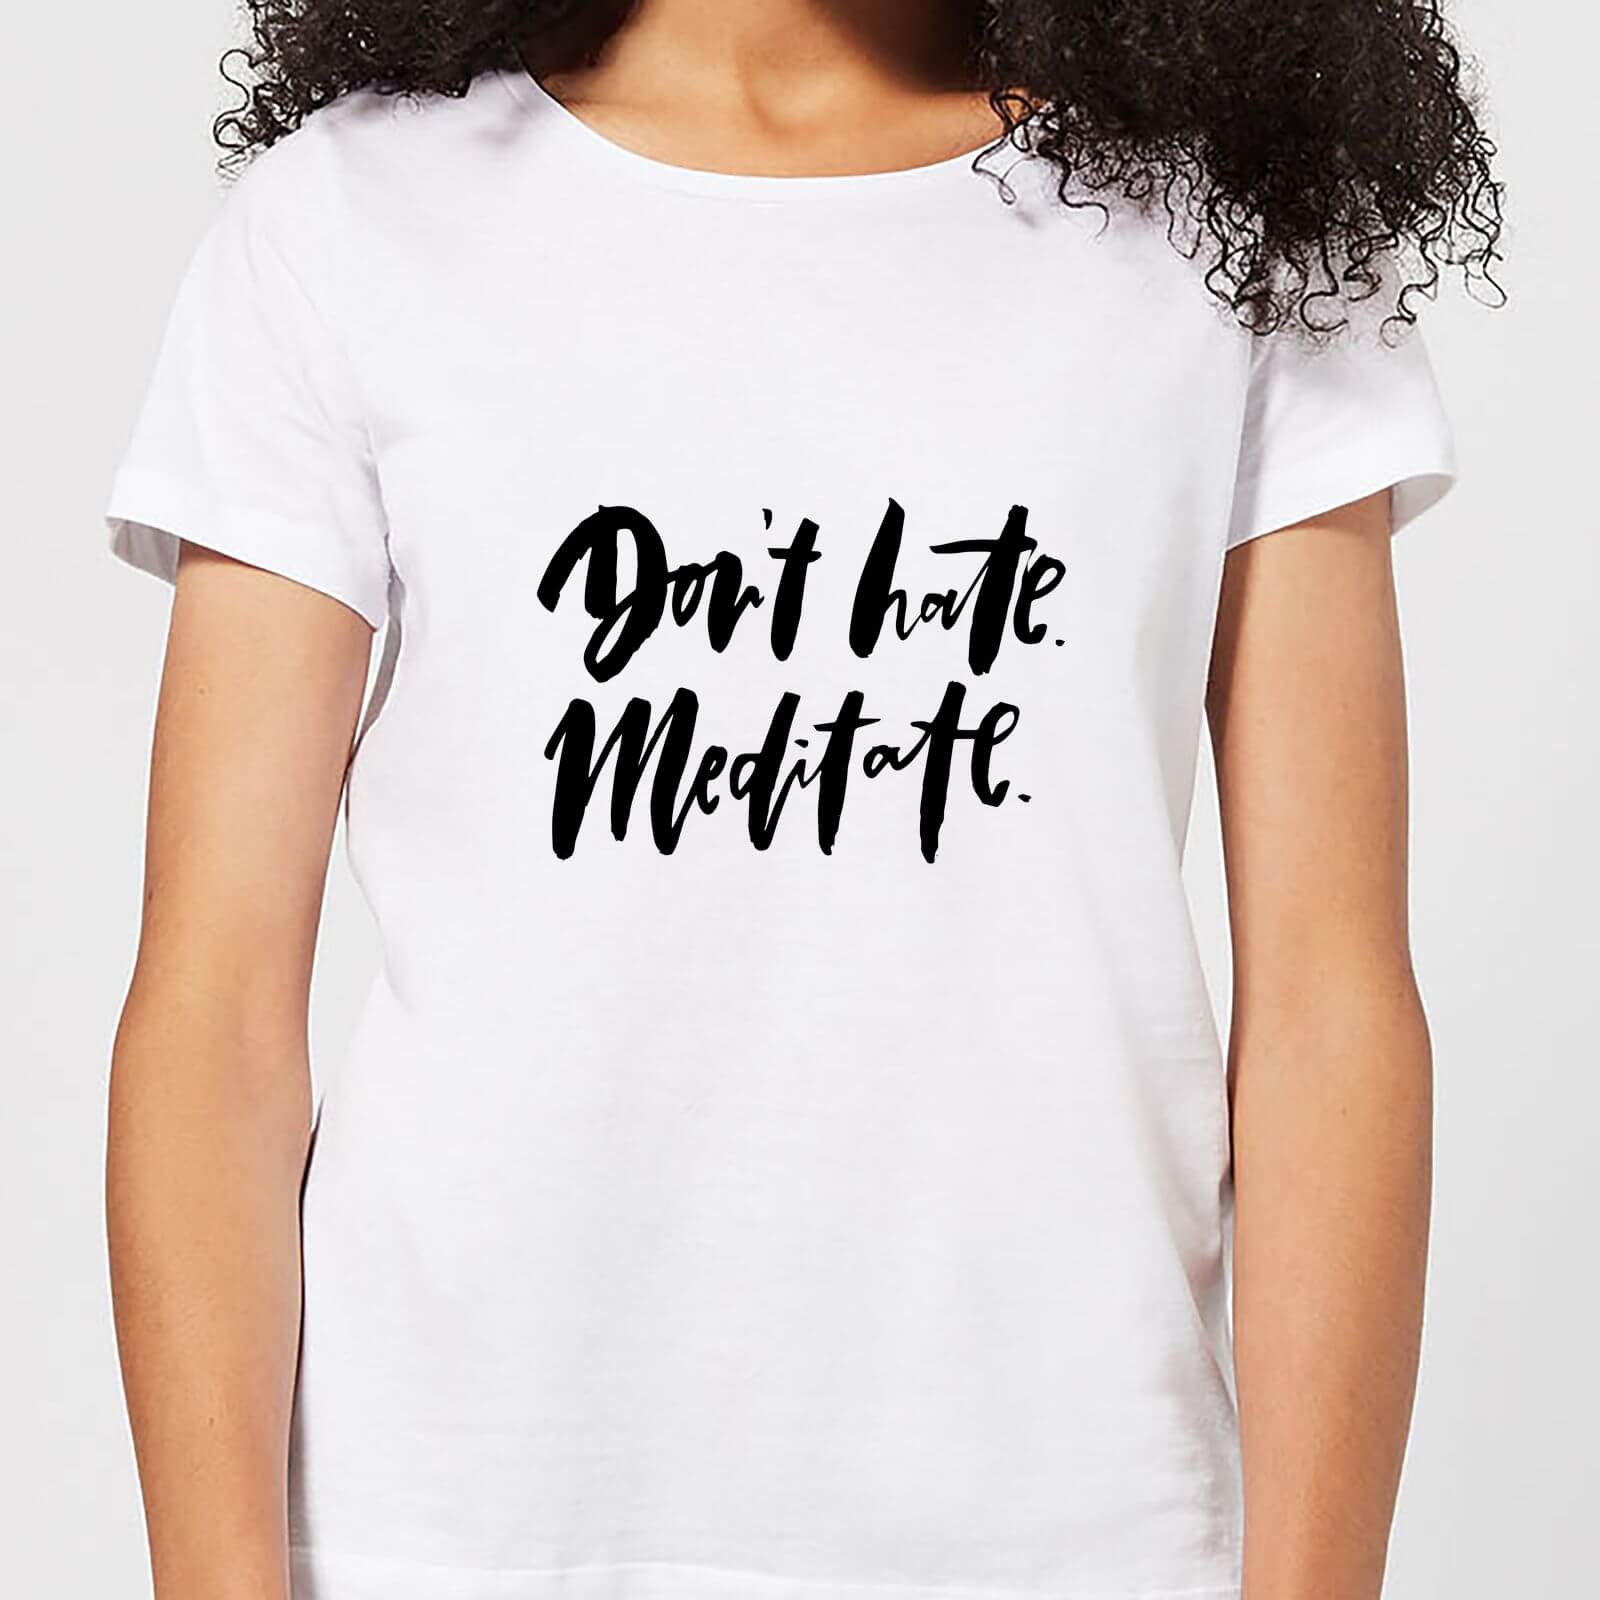 Don't Hate, Meditate Women's T-Shirt - White - S - White